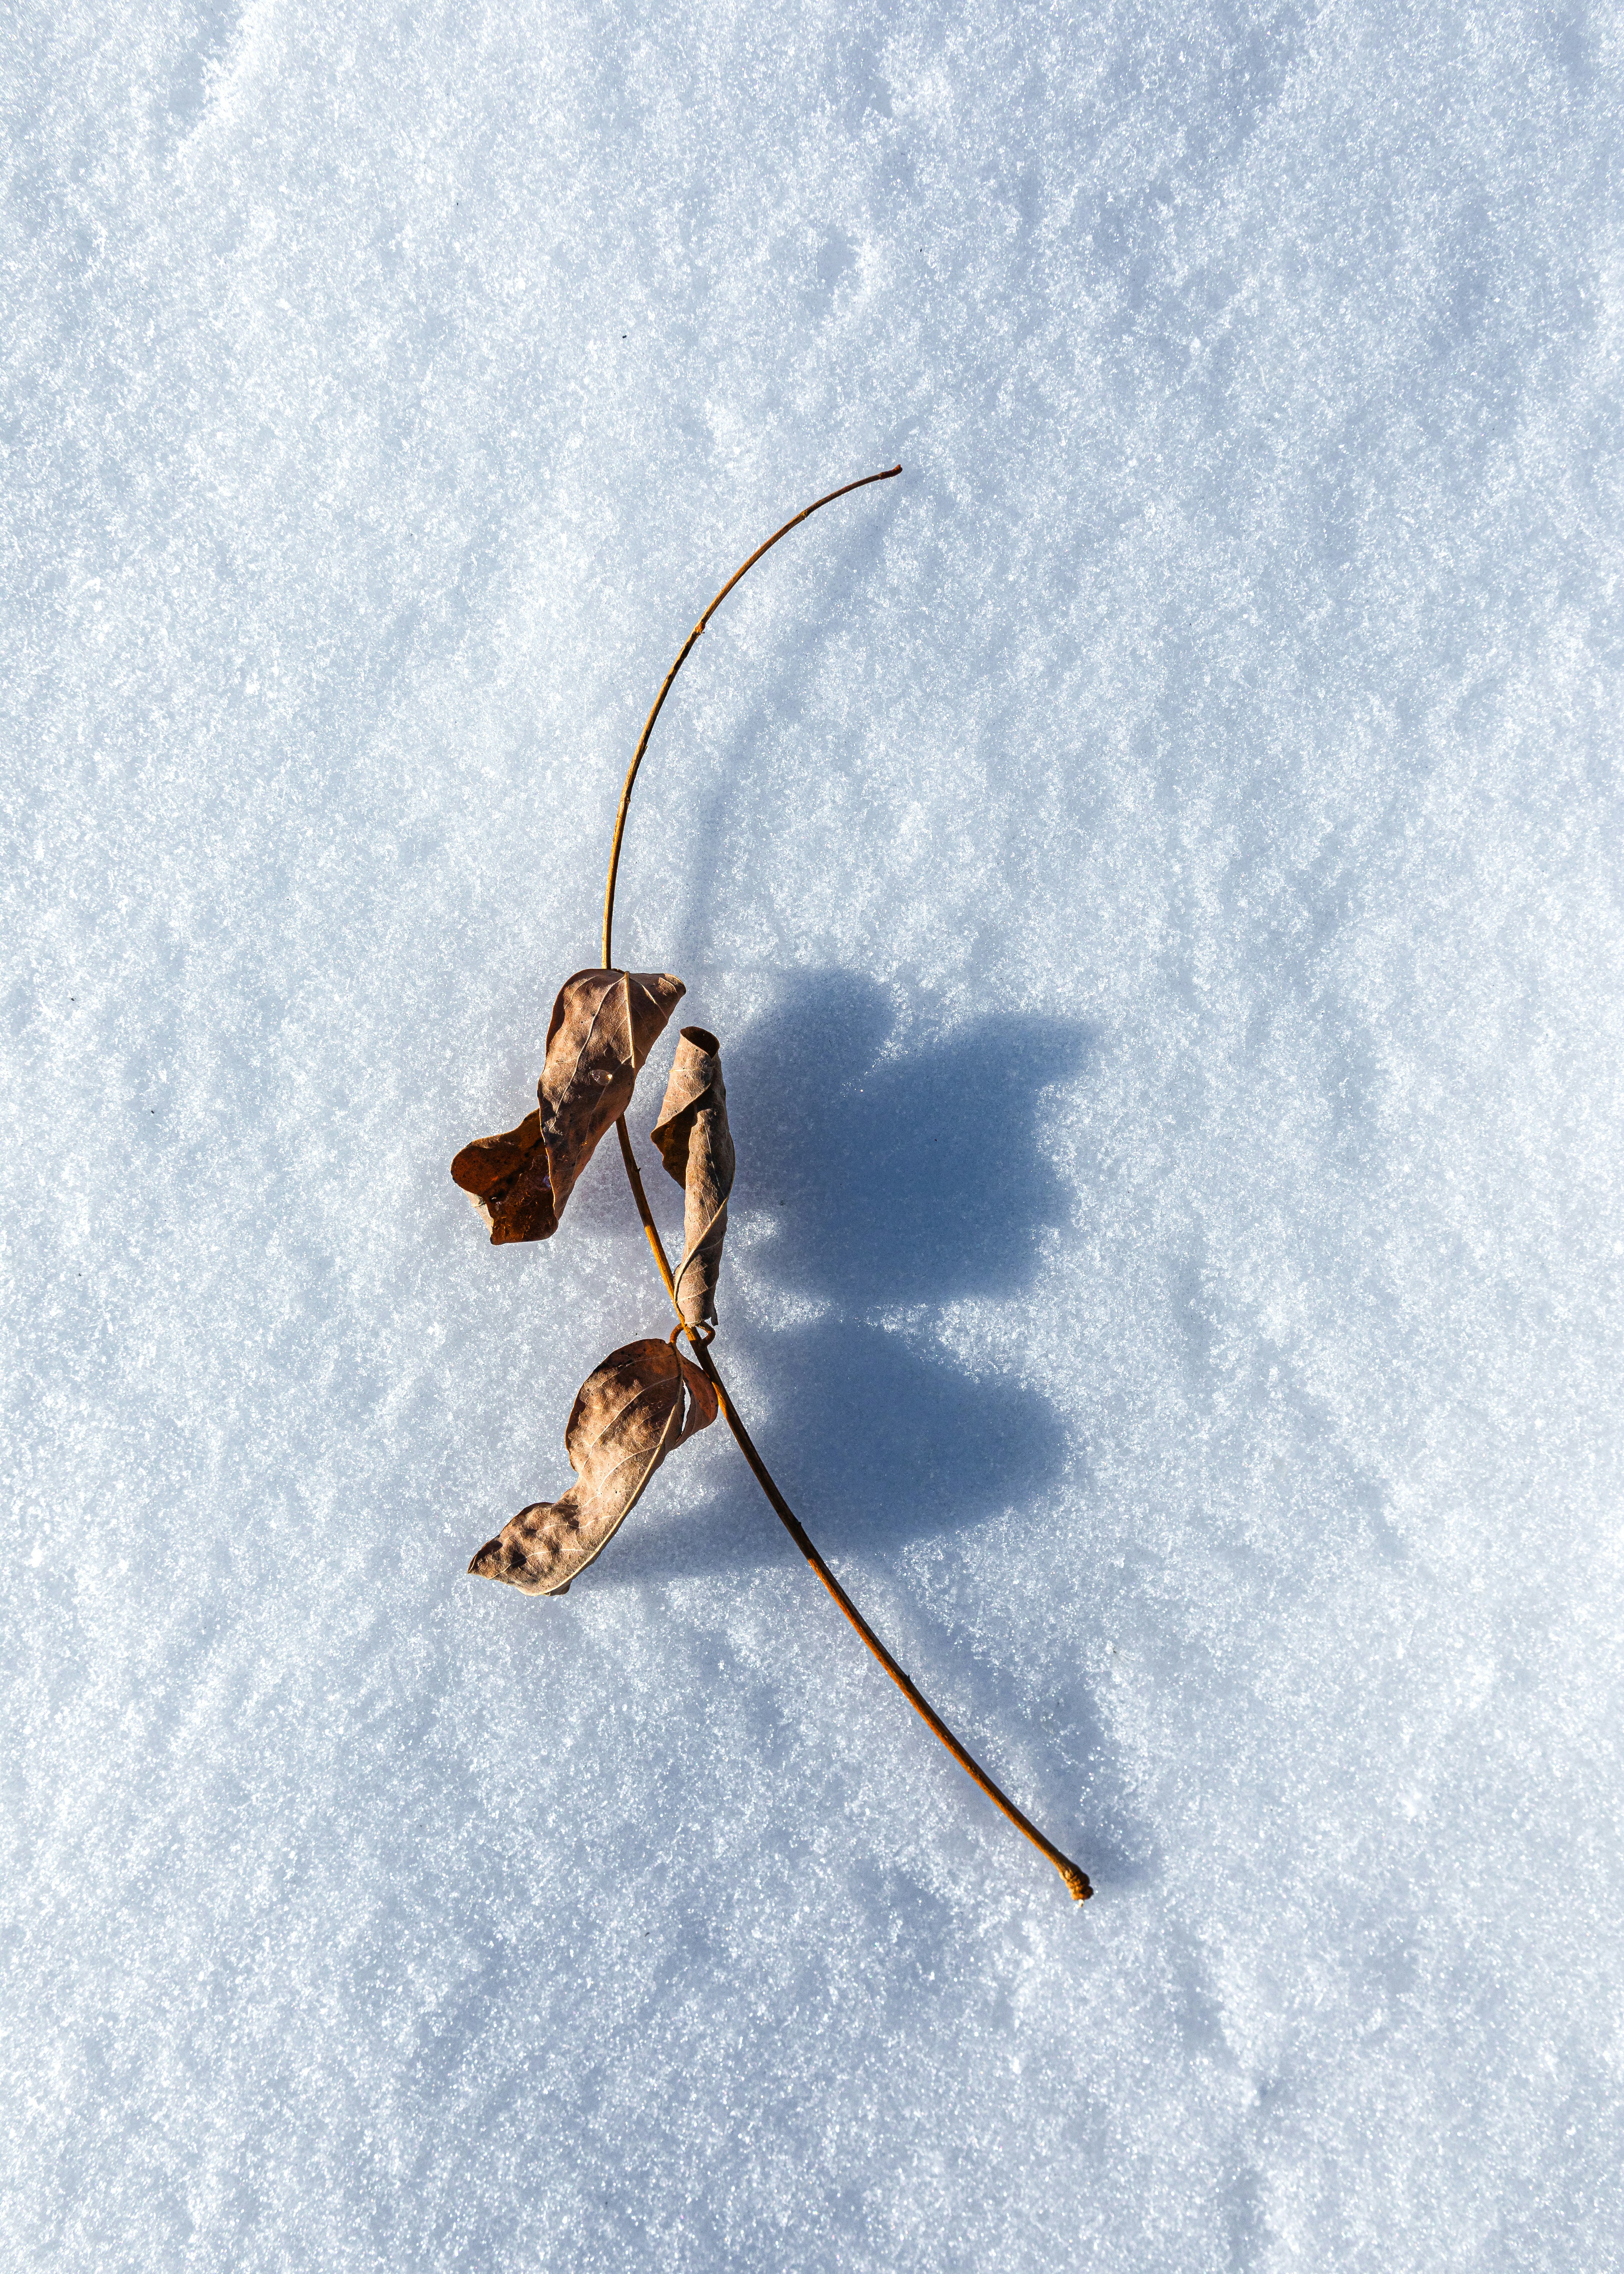 brown dried leaf on white snow